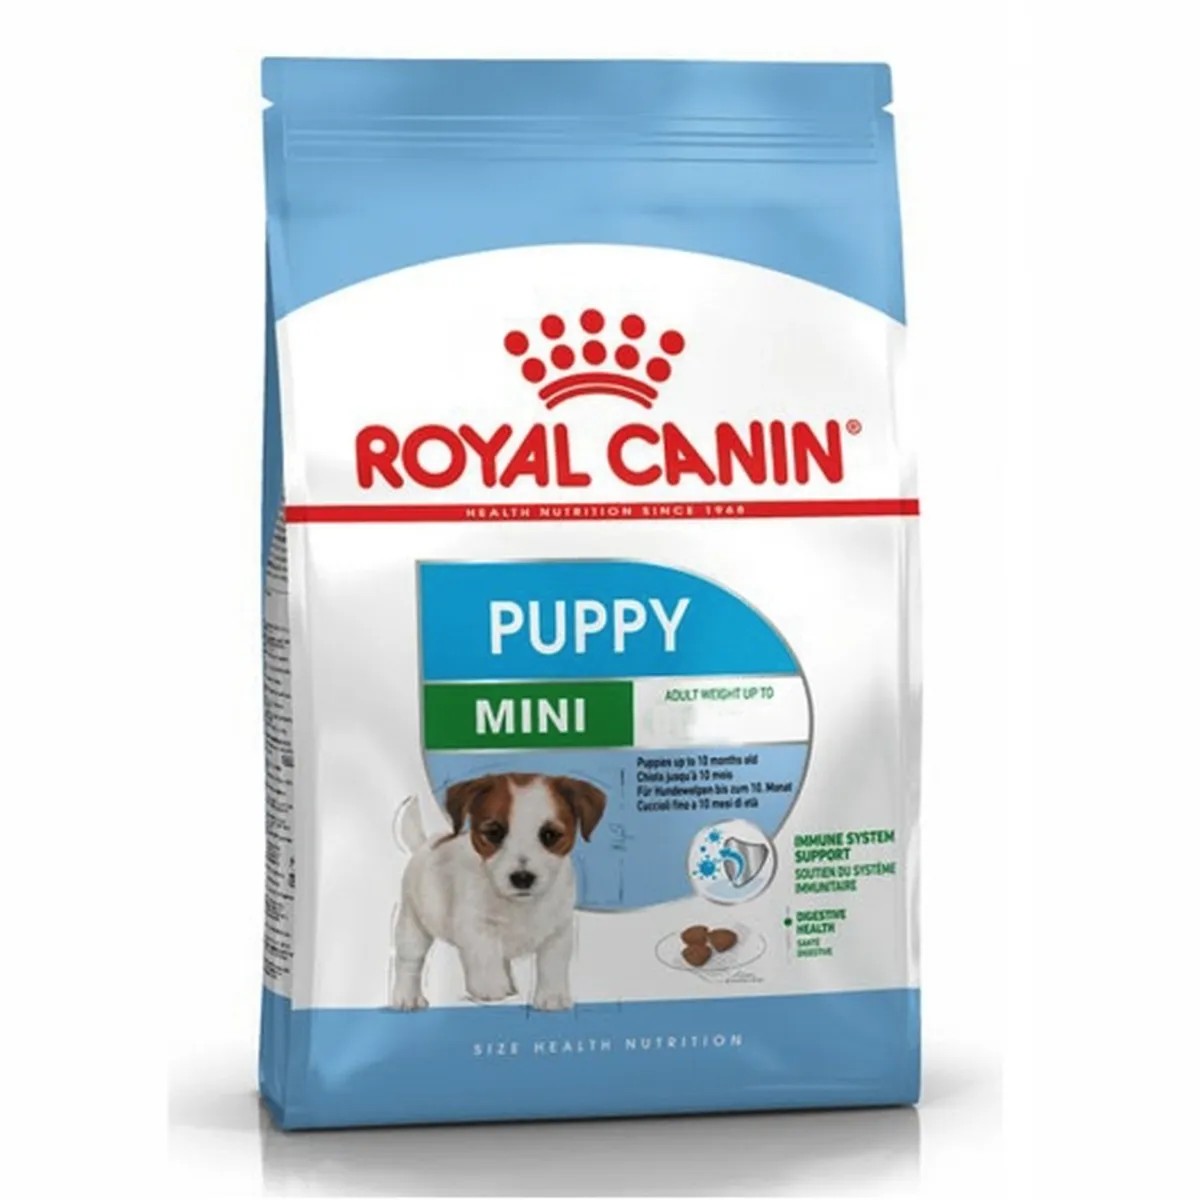 Royal Canin Puppy Mini - 8 kg